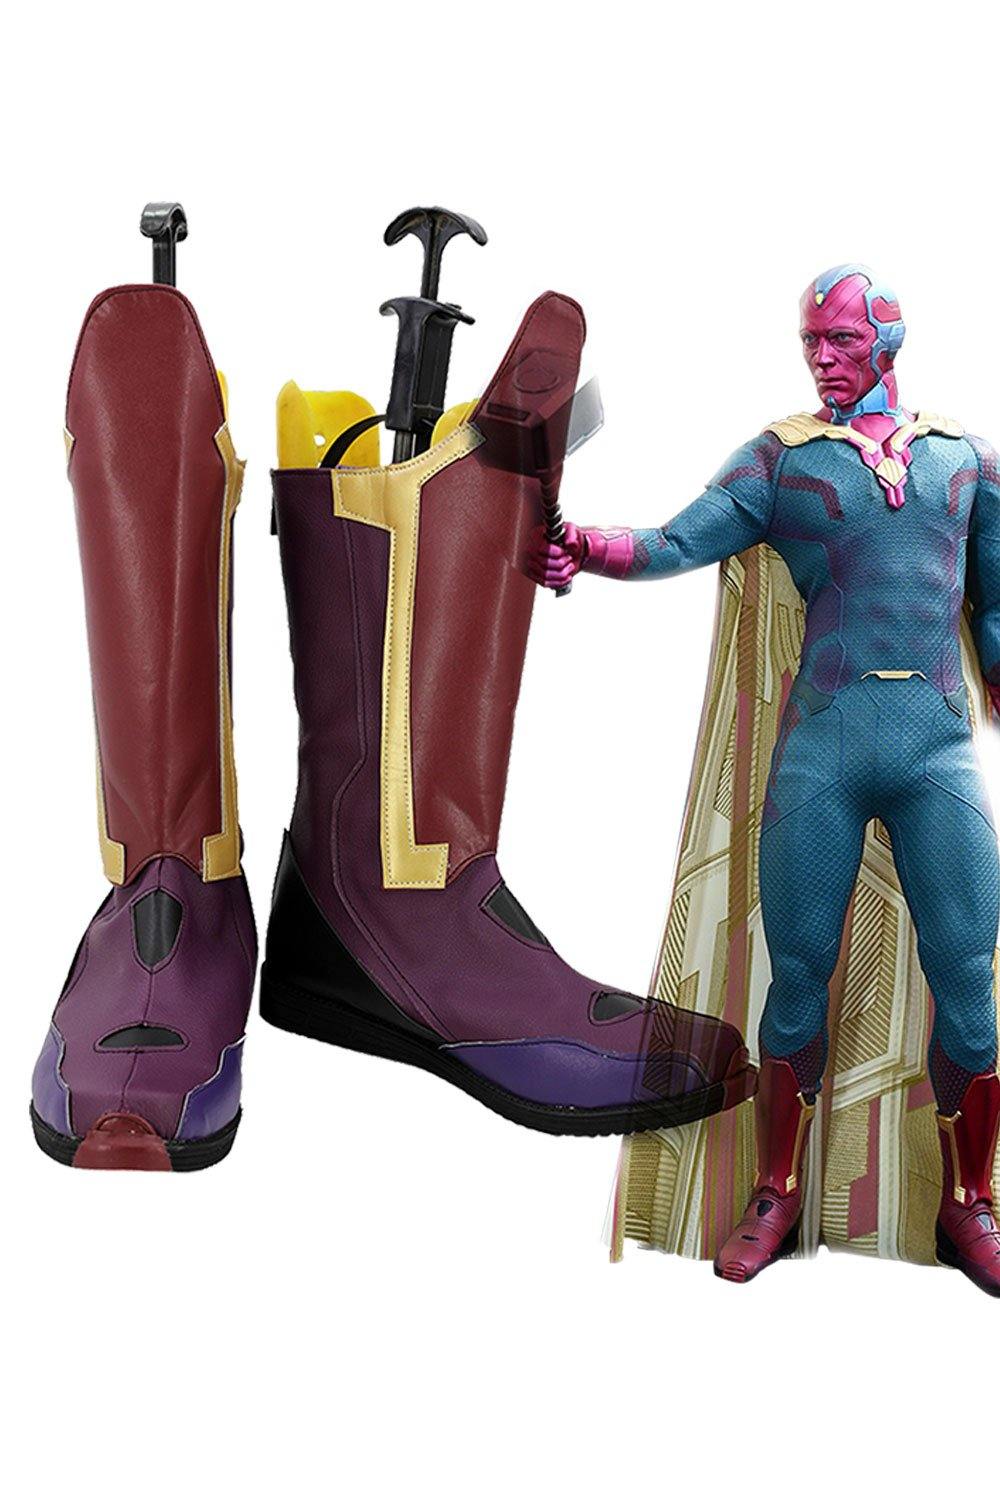 Avengers 3 Infinity War Vision Superhero Superheld Cosplay Schuhe Stiefel - cosplaycartde